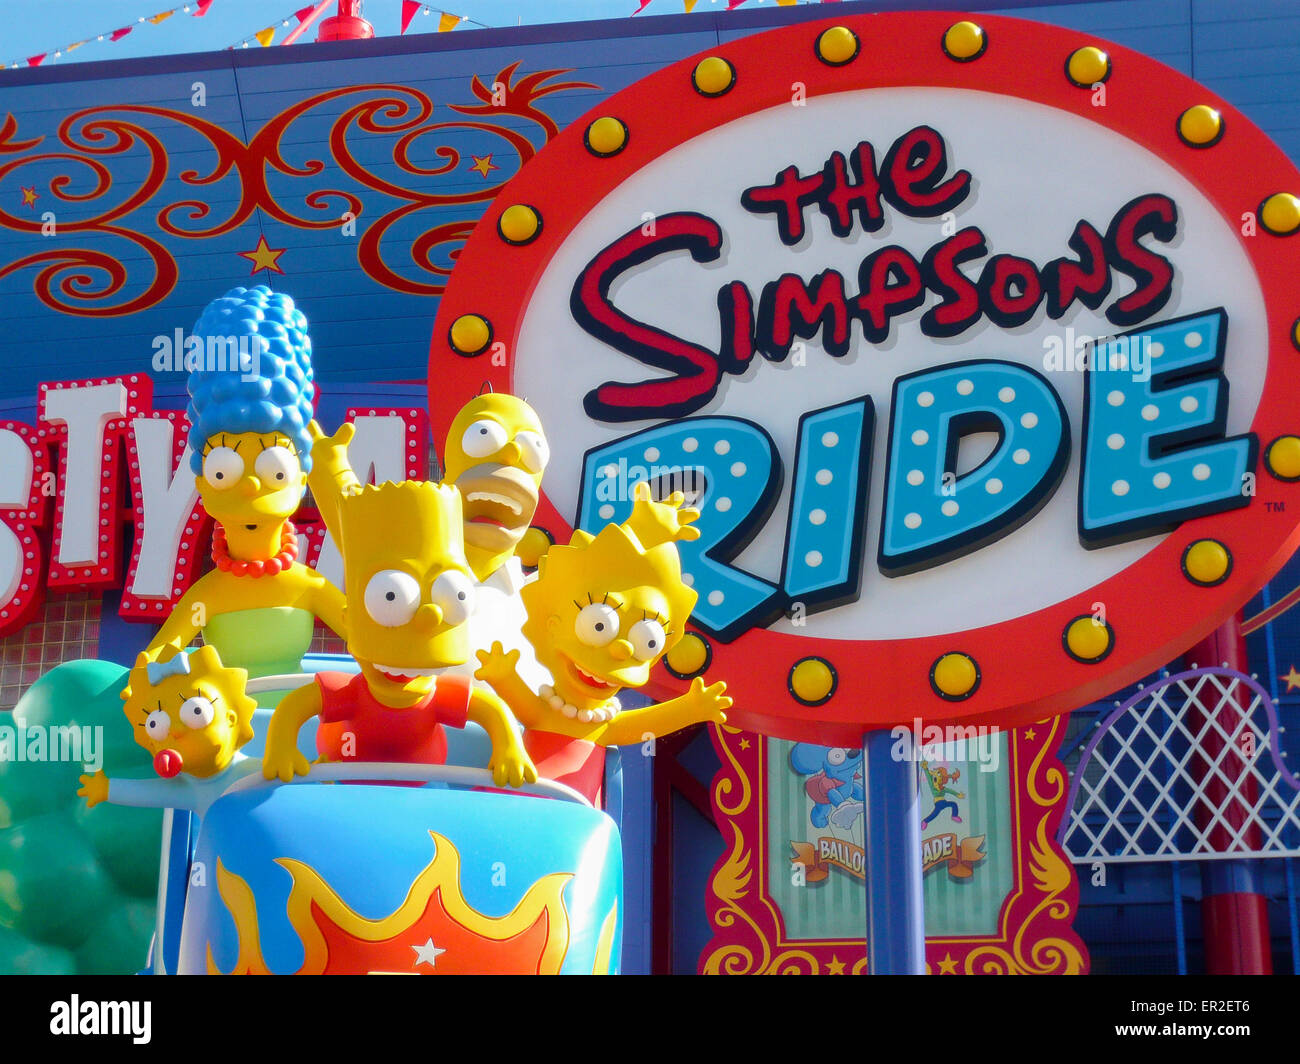 The Simpsons ride at Universal Studios, Florida Stock Photo